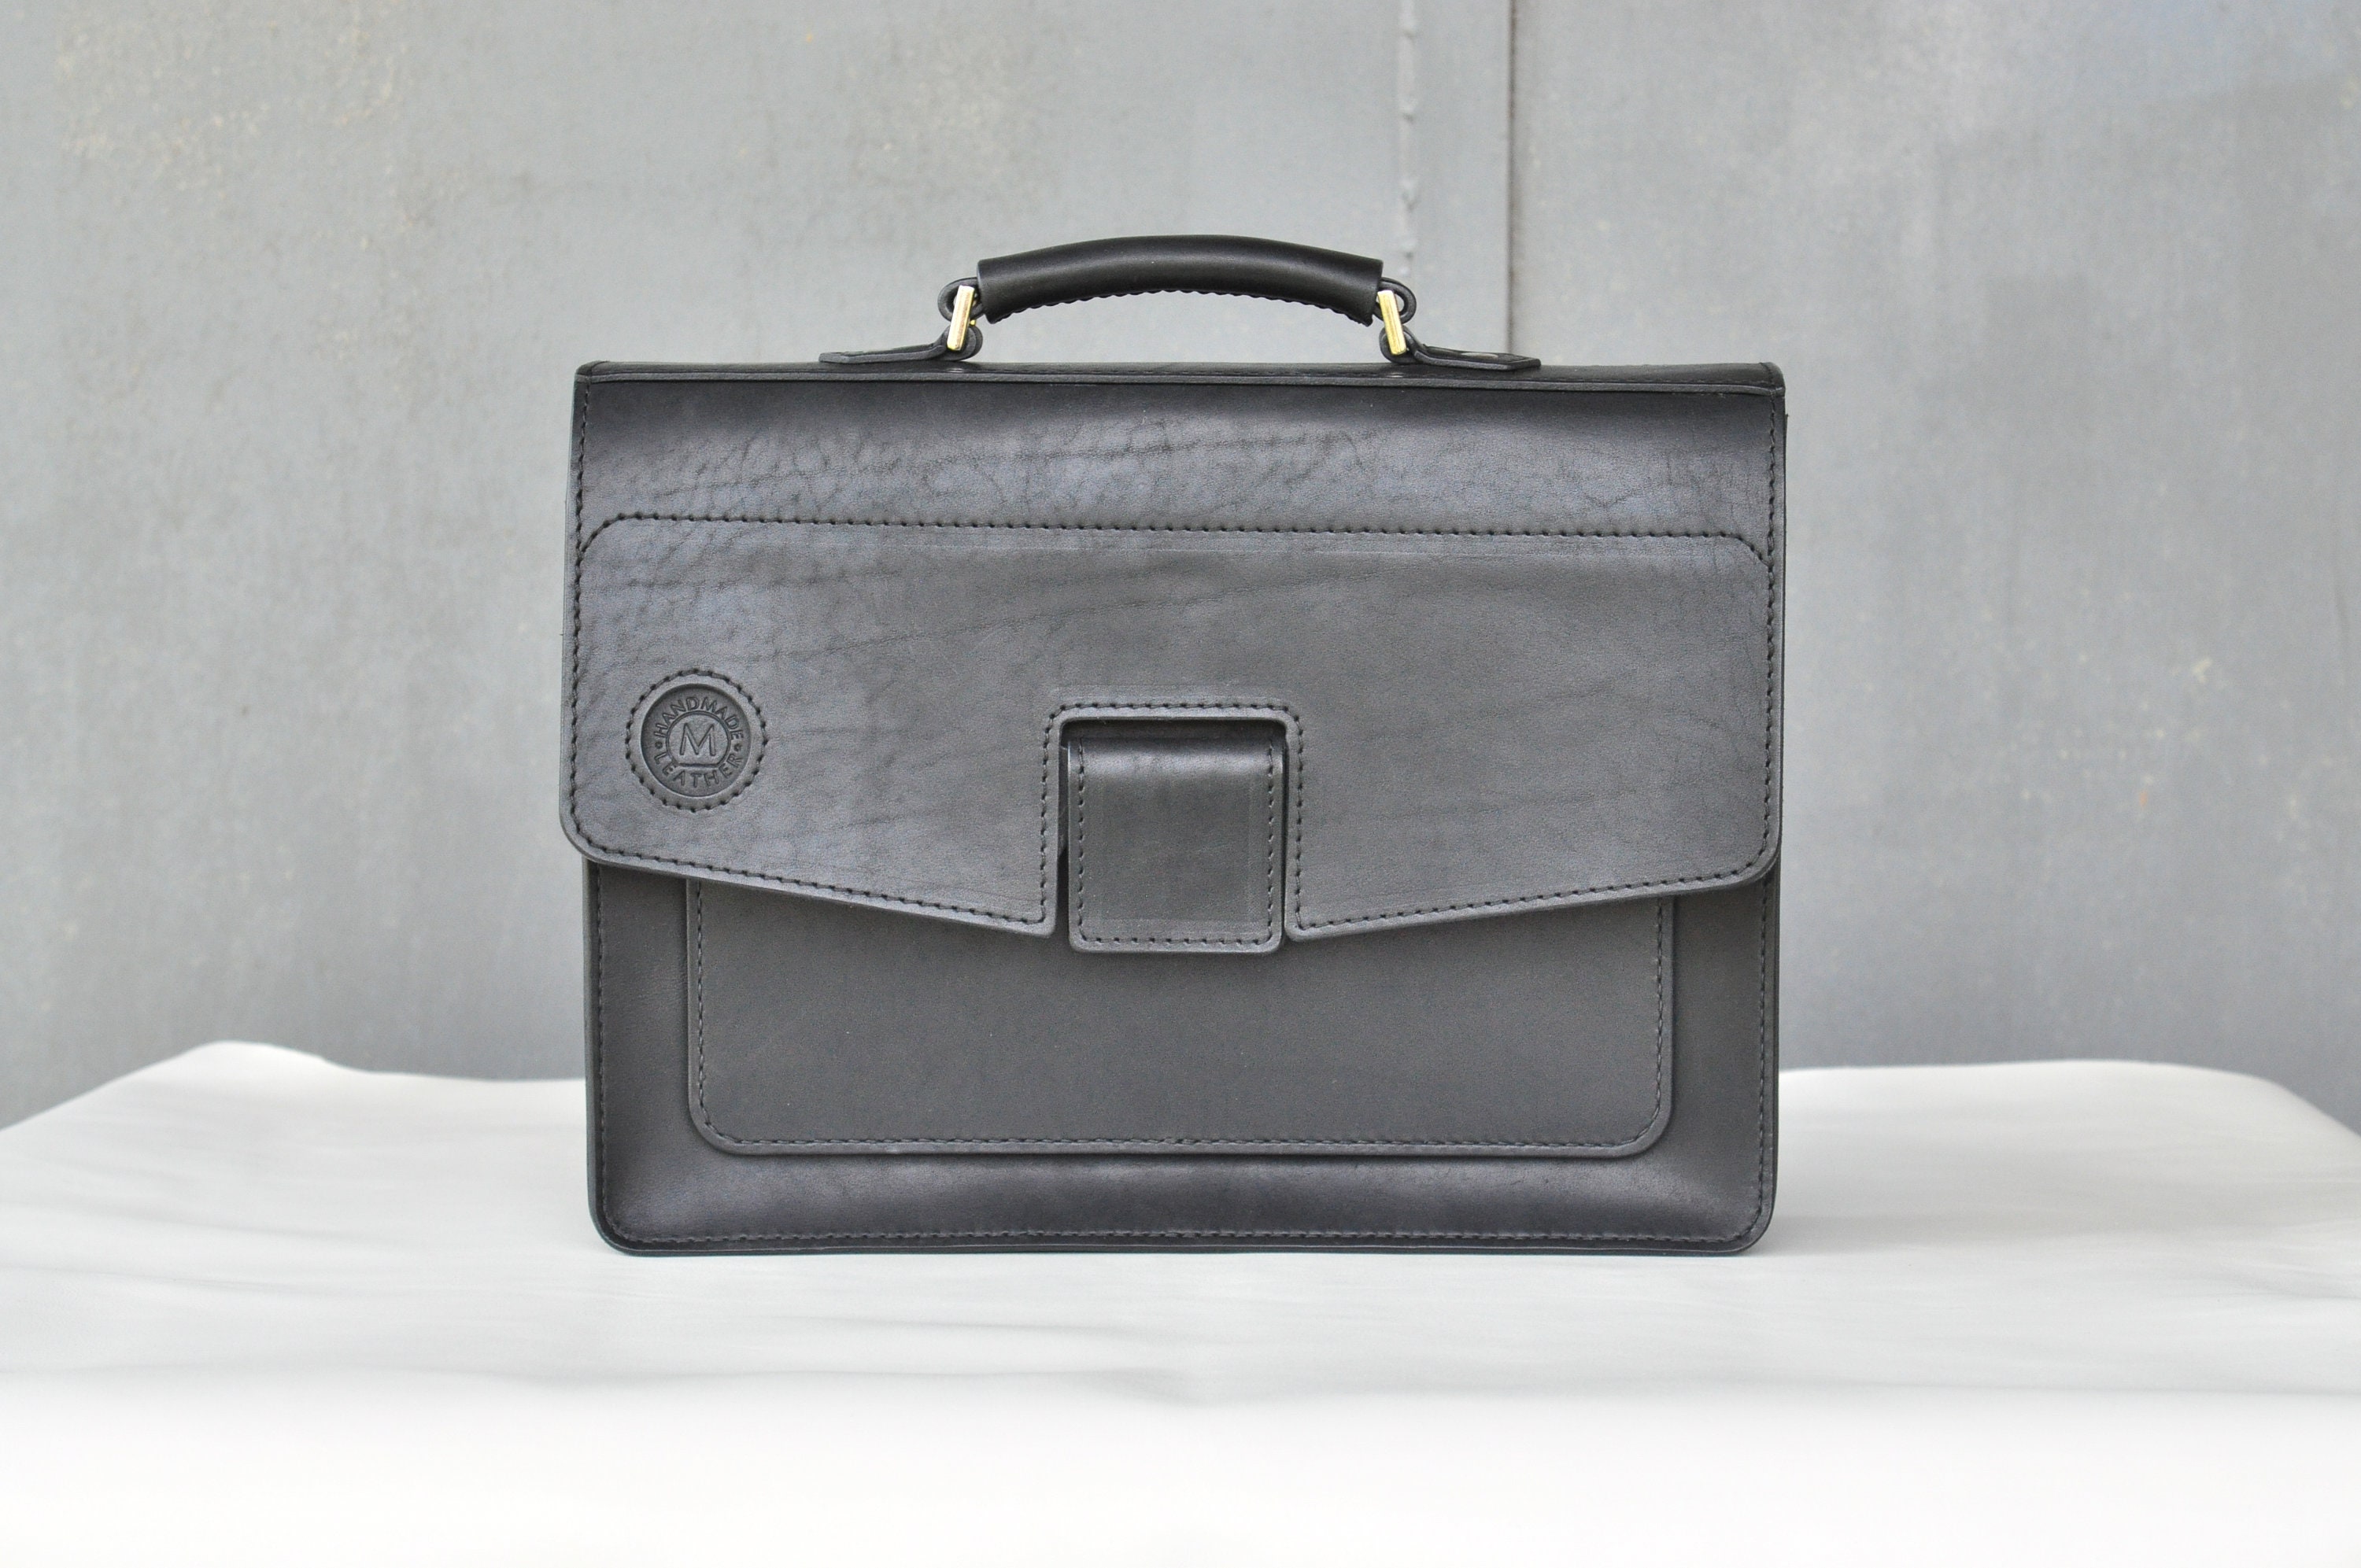 Discreet Bag - Briefcase, Black Genuine Leather Elegant Handmade Accessories Minimalist Fashion Small High-Quality Briefcase